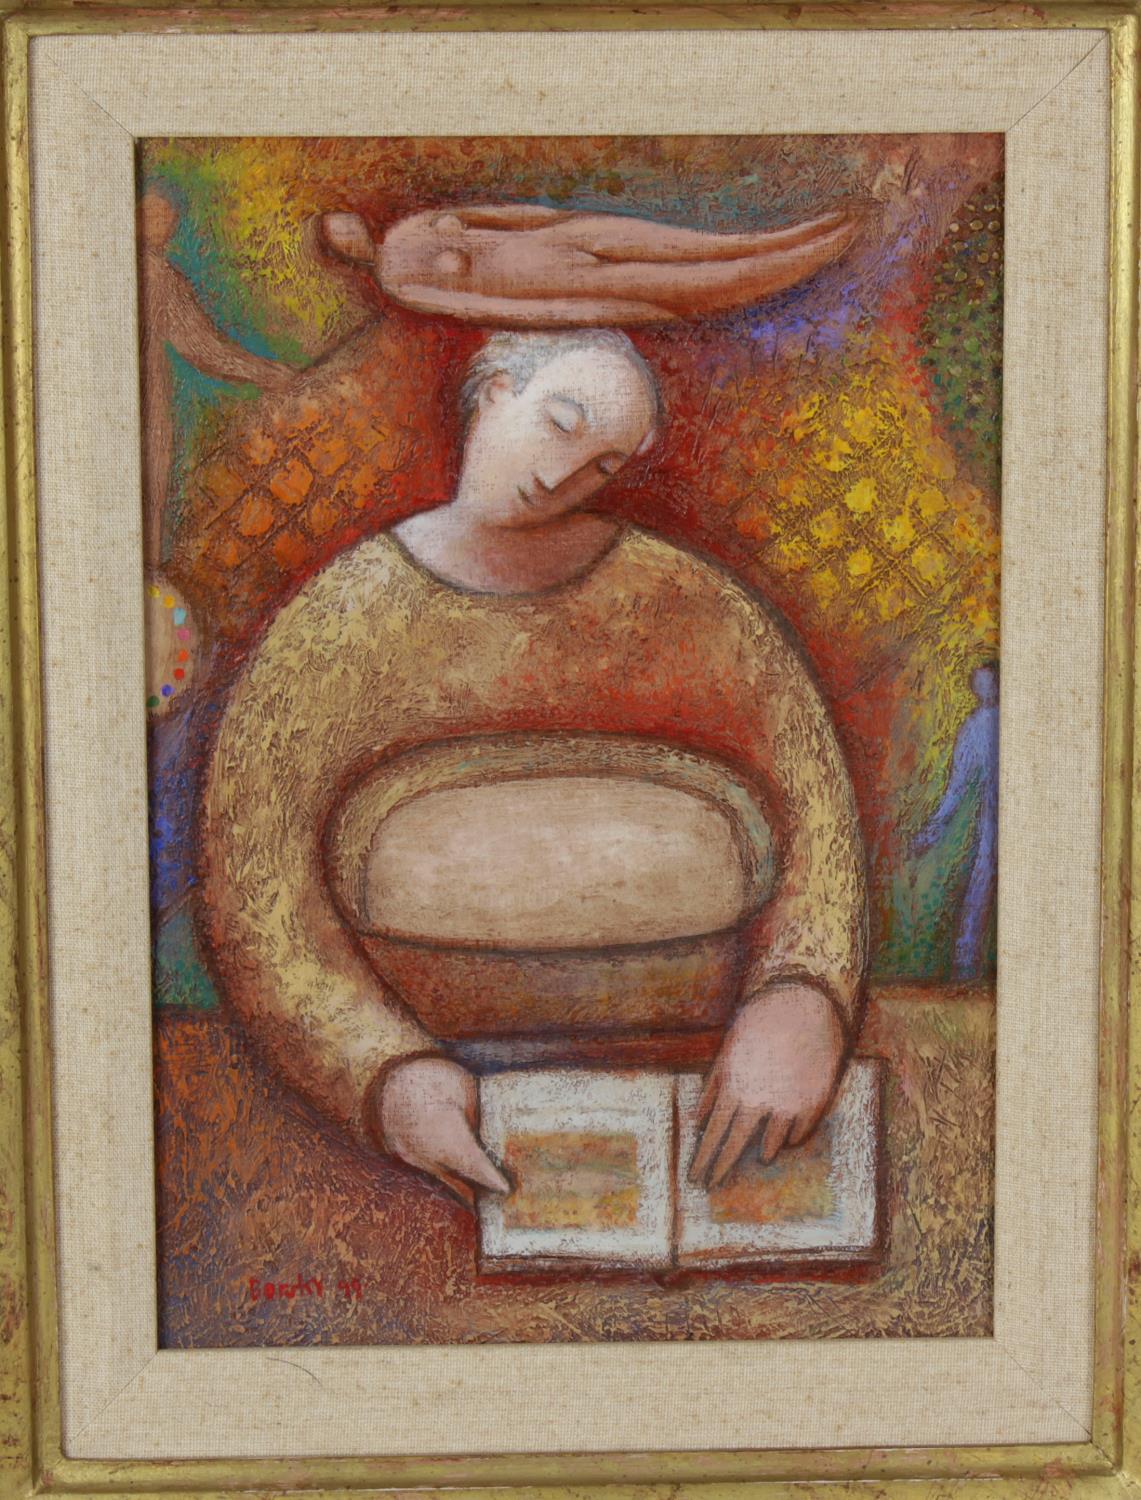 ARR Jiri Borsky, (b. 1945), 'Contemplating Bonard', a woman reading a book, acrylic on board, signed